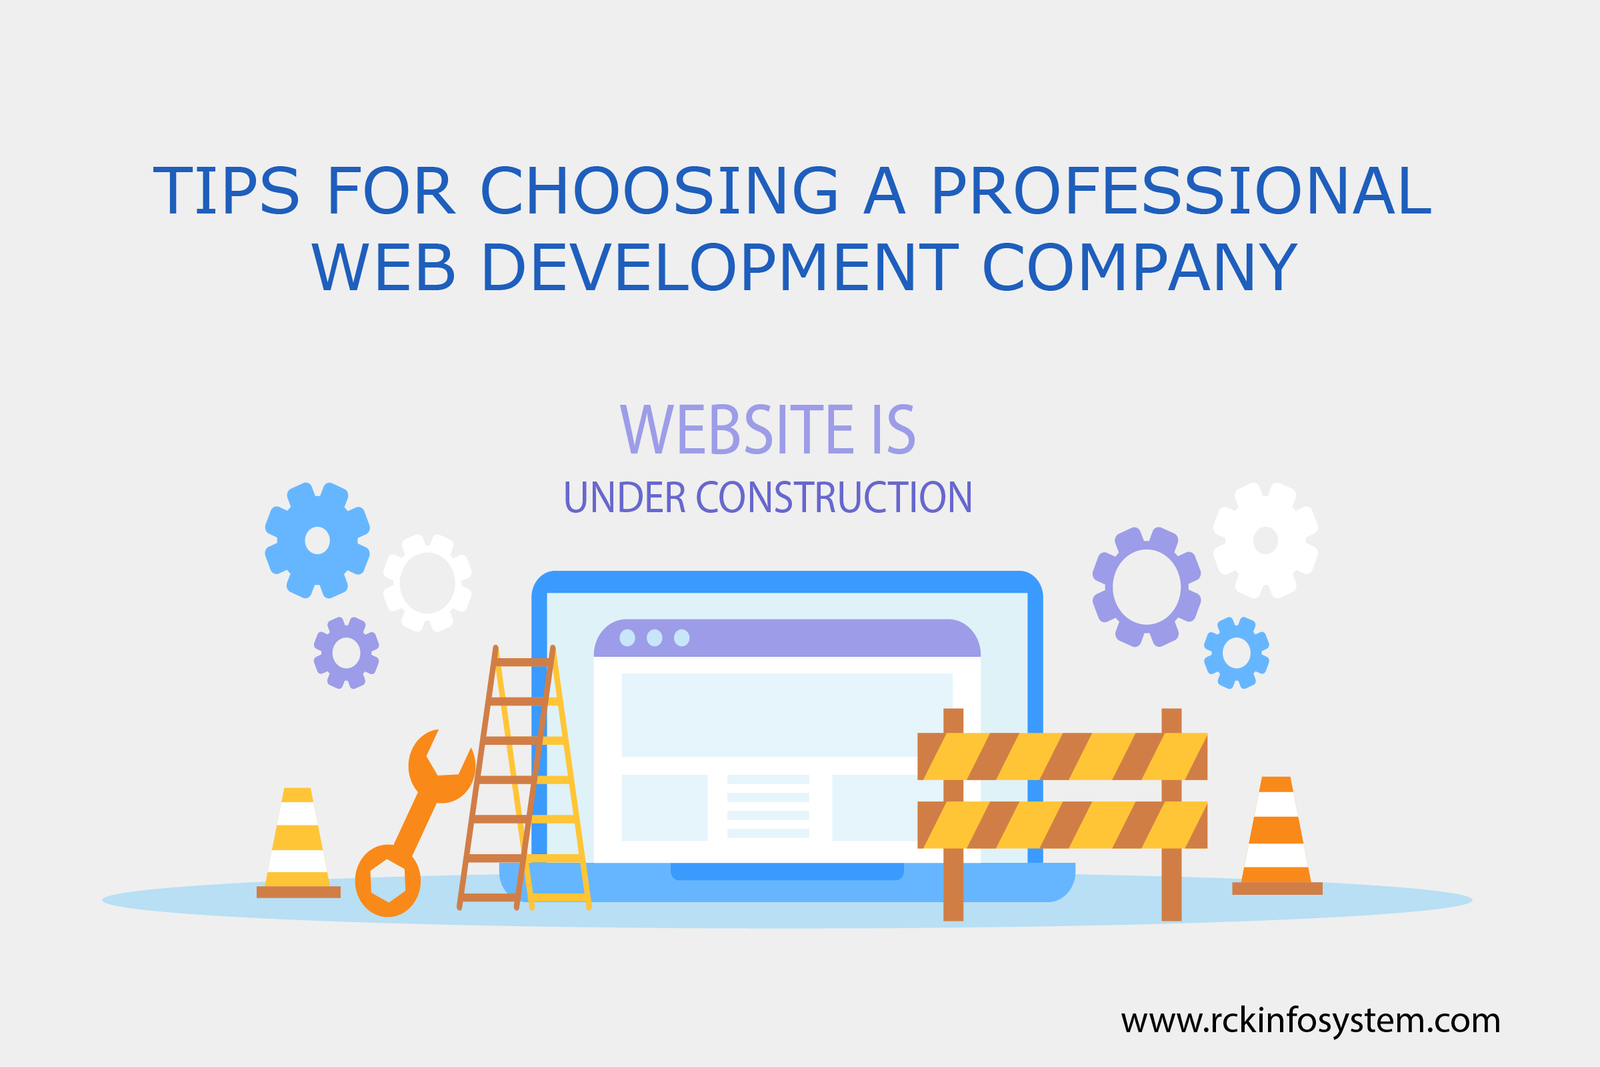 Tips For Choosing a Web Development Company